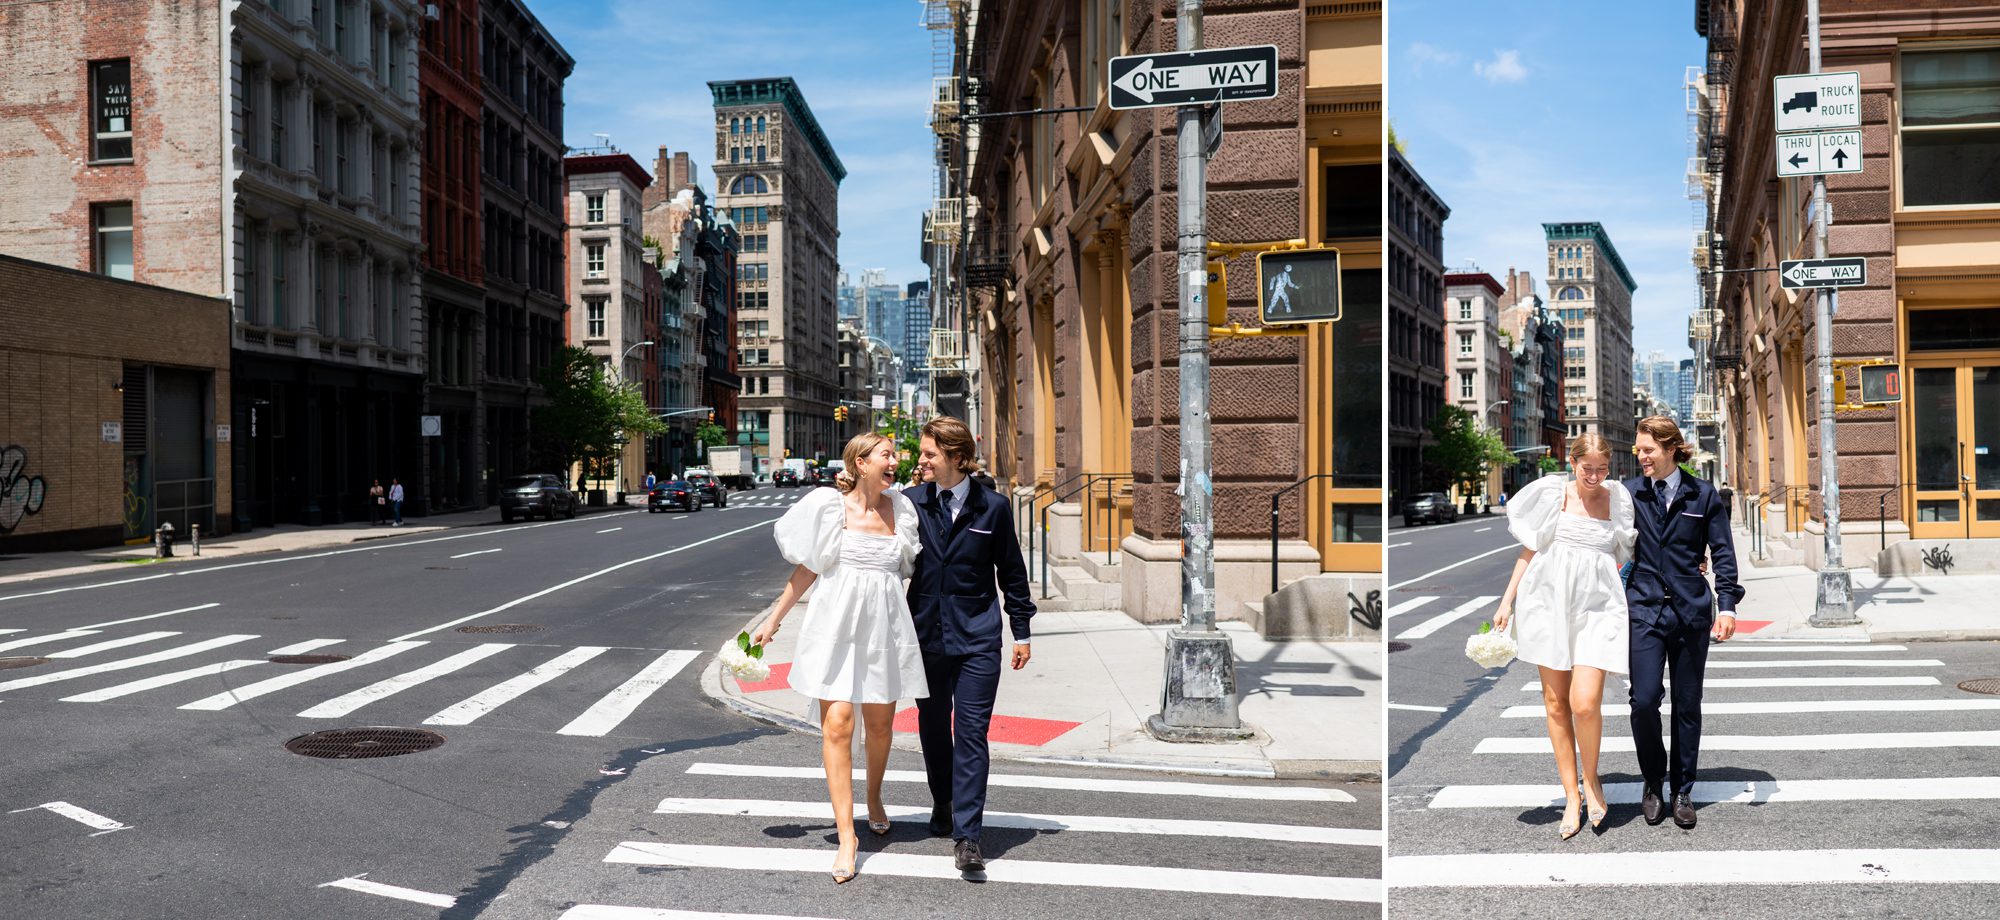 NYC Crosswalk Wedding Photos